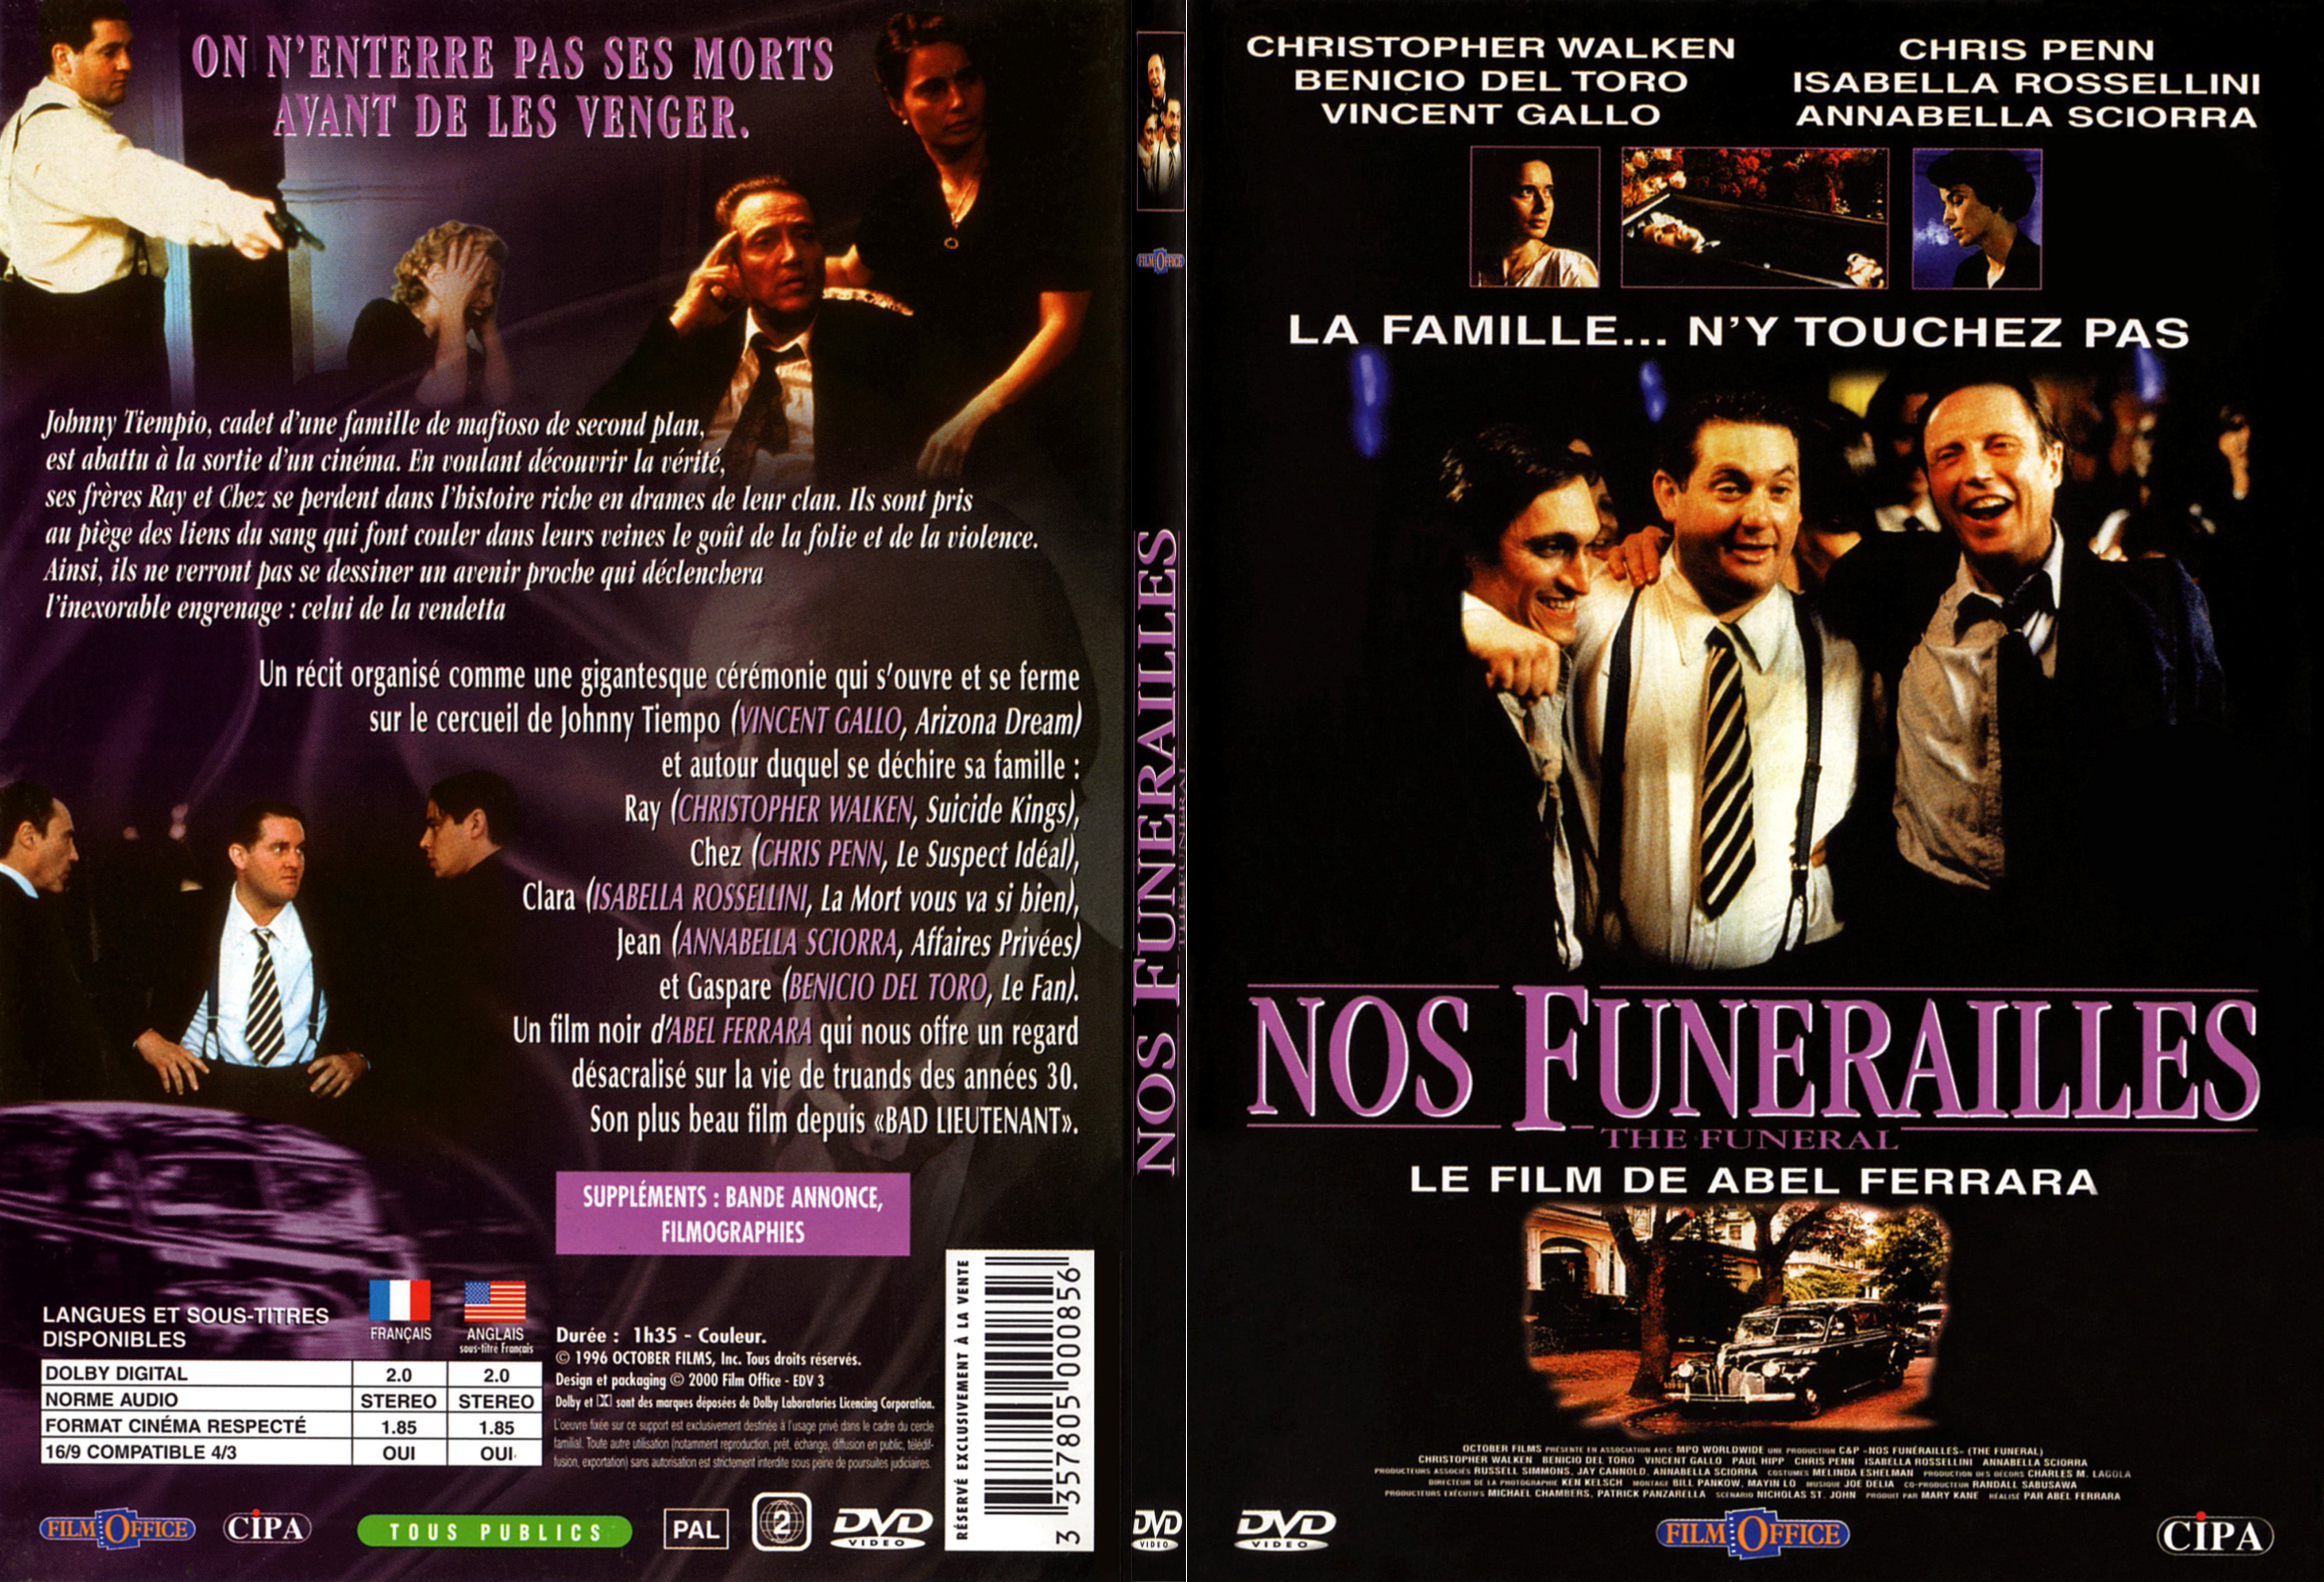 Jaquette DVD Nos funerailles - SLIM